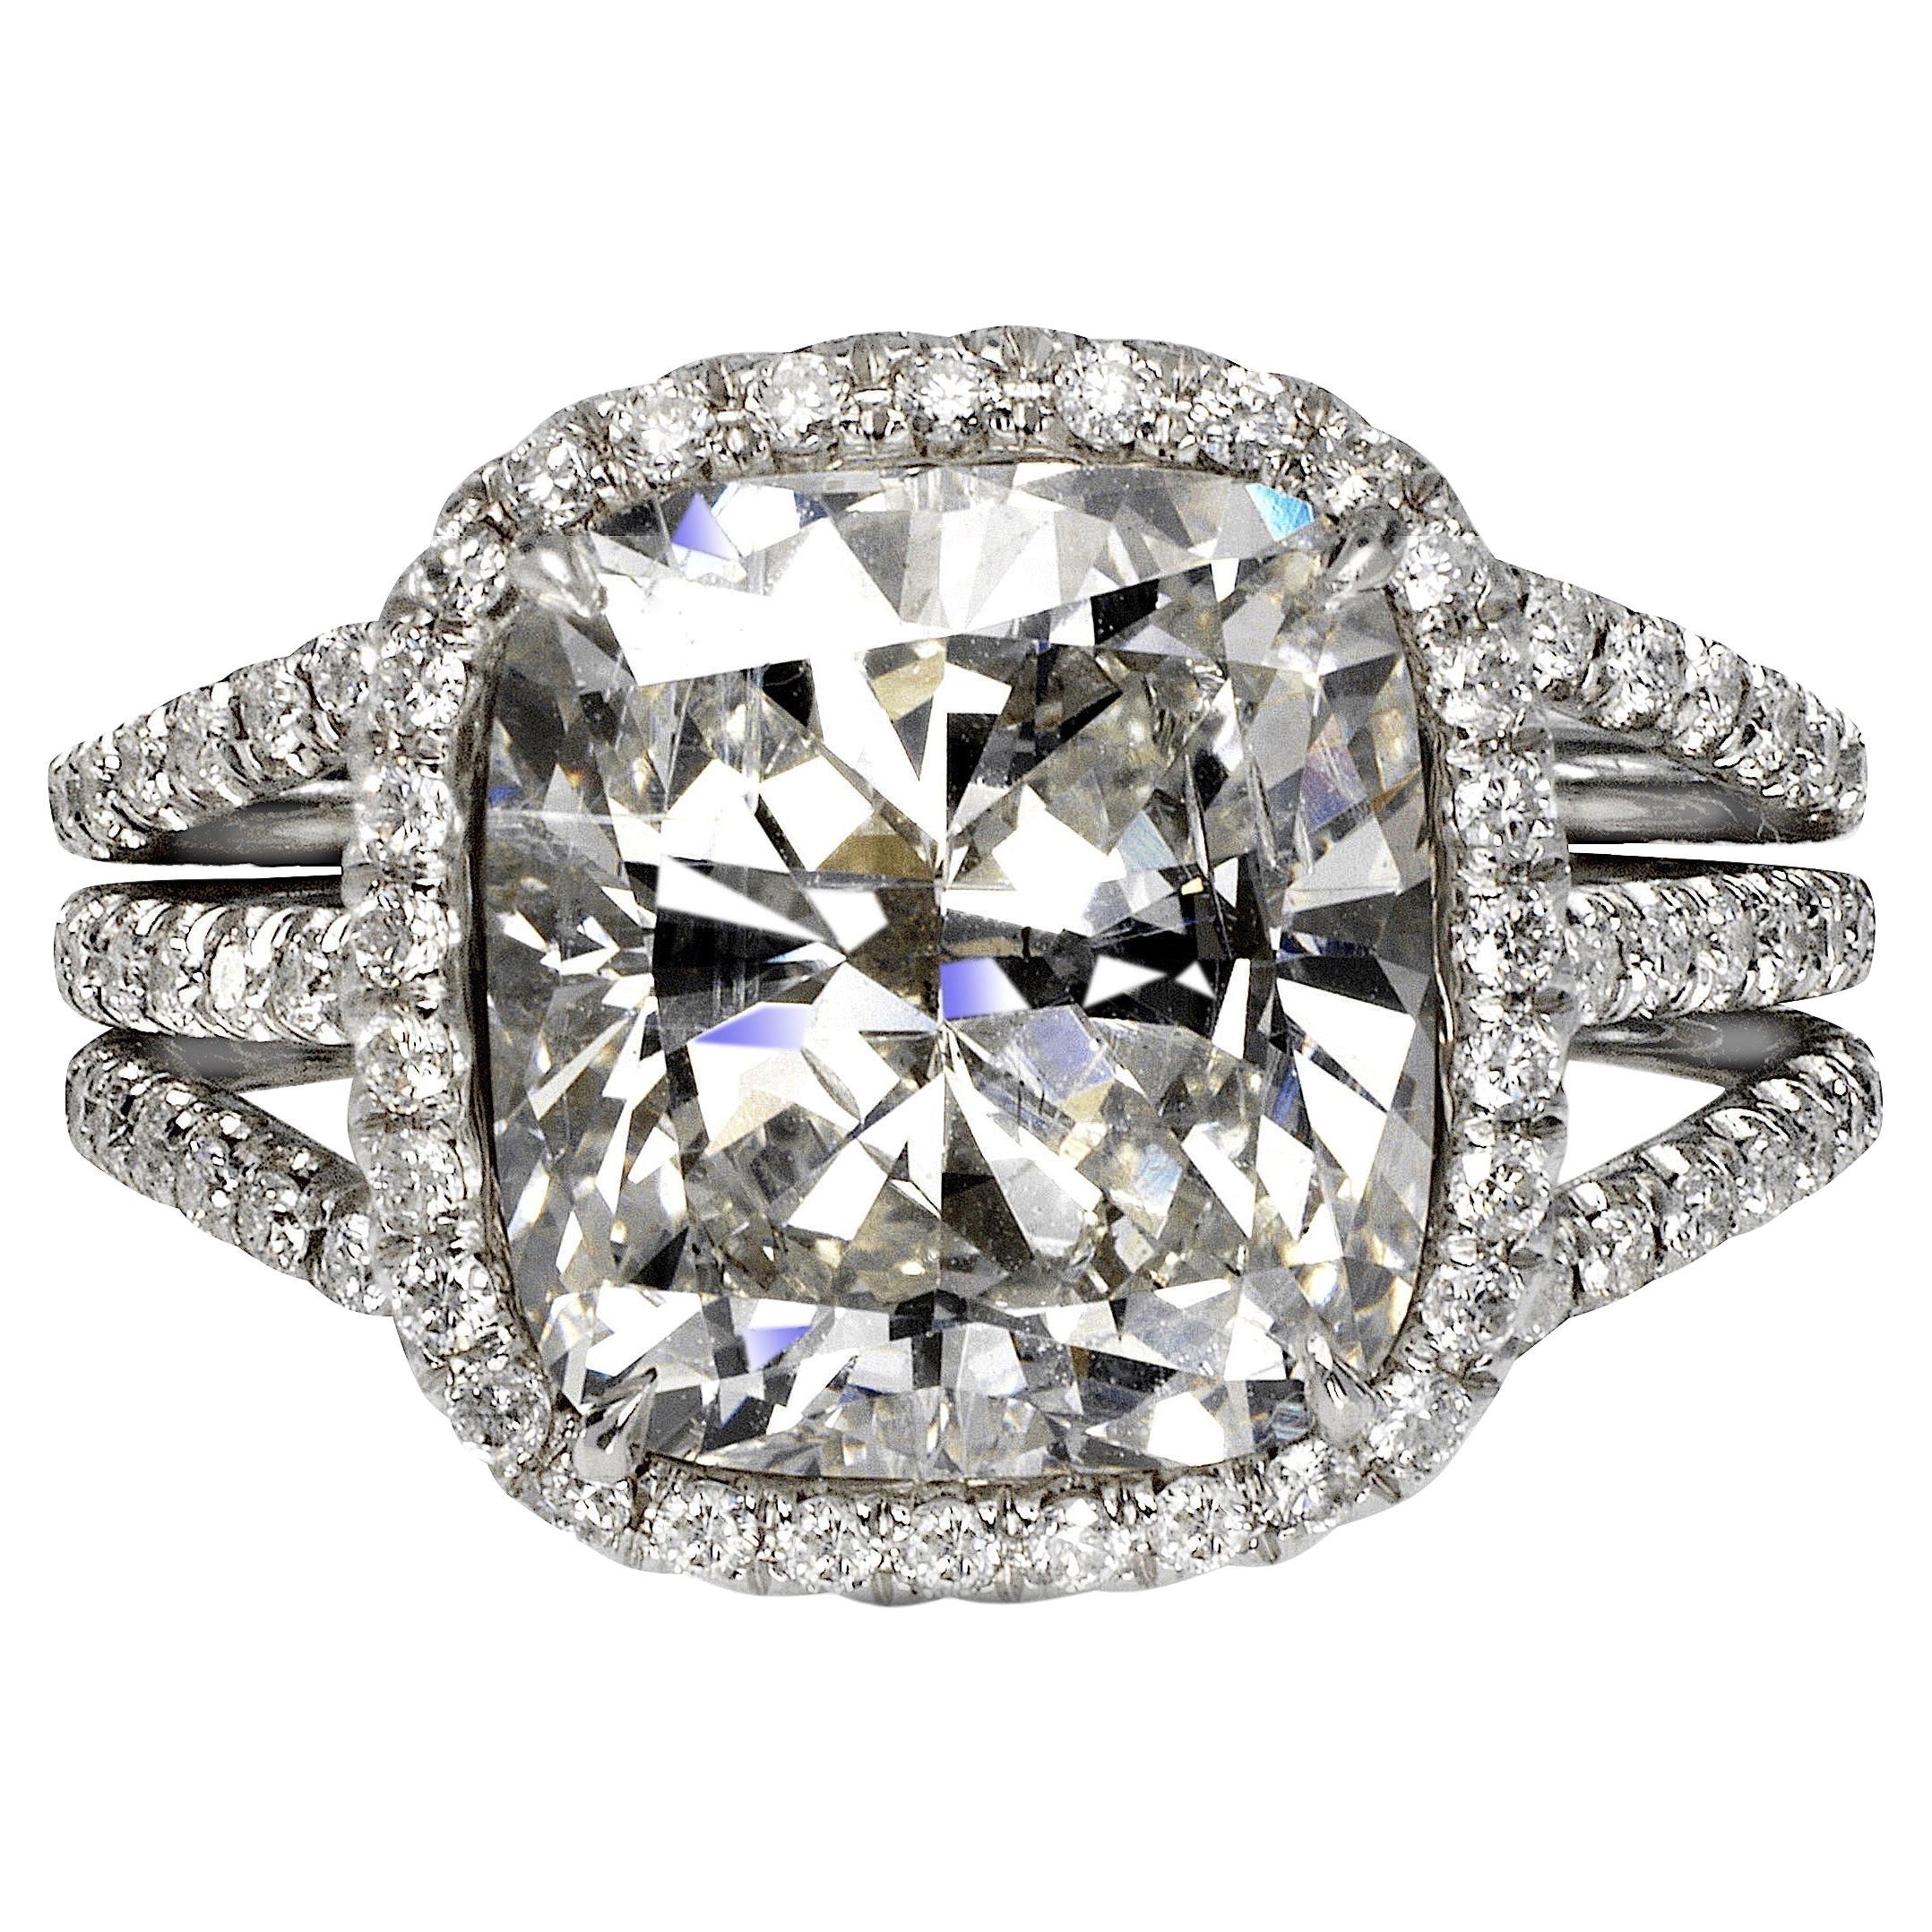 7 Carat Cushion Cut Diamond Engagement Ring Certified F VS2